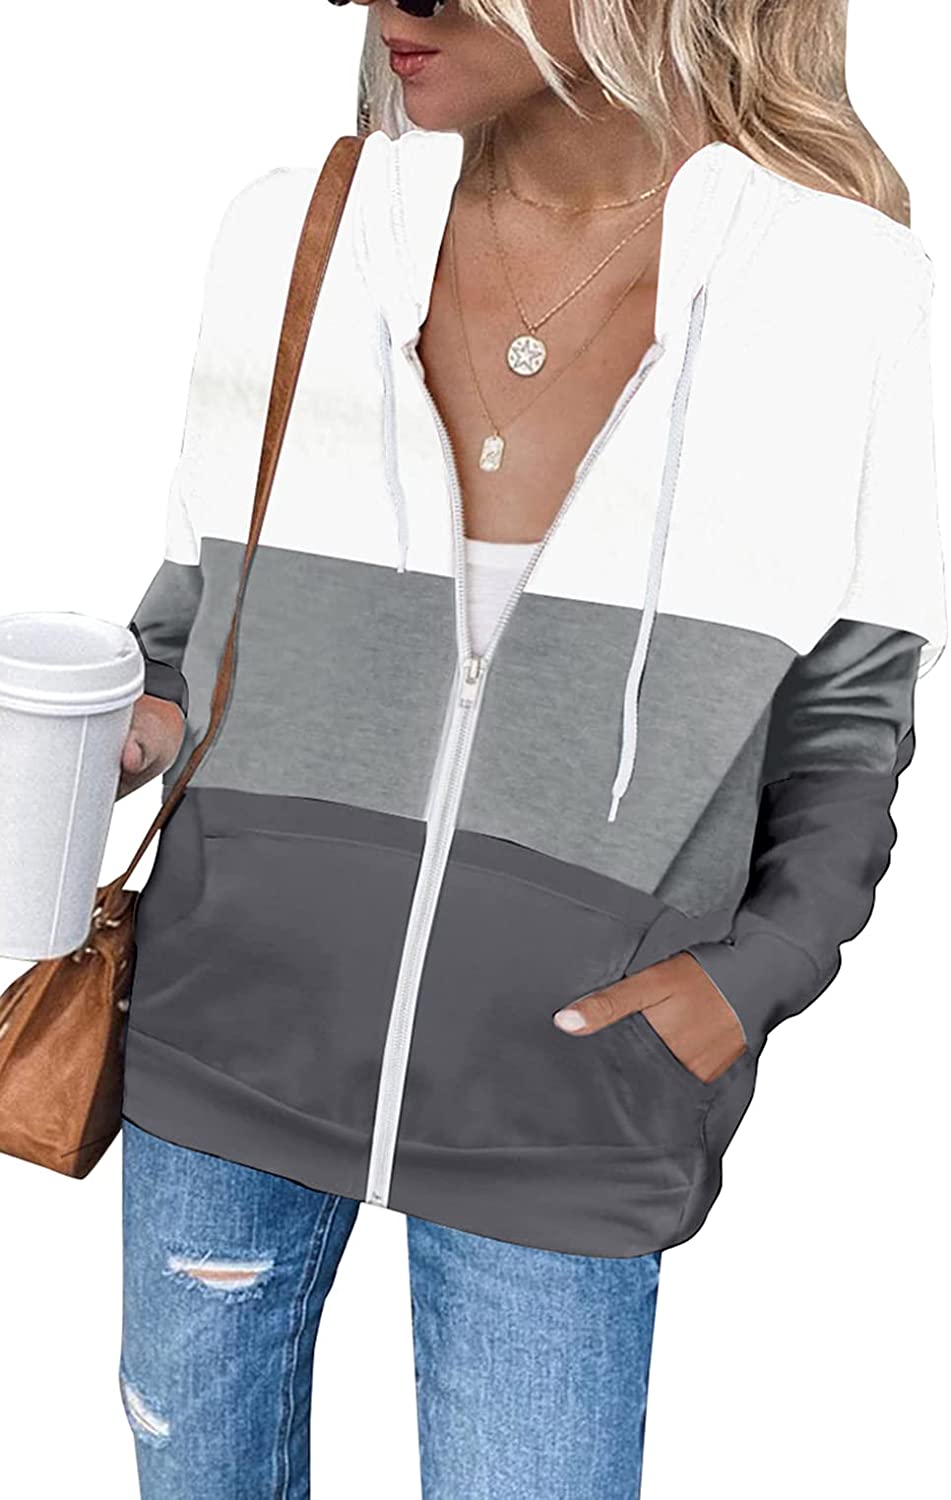 Shawhuwa Womens Long Sleeve Hooded Sweatshirt Hoodies Zip Up Track Jacket with Pockets